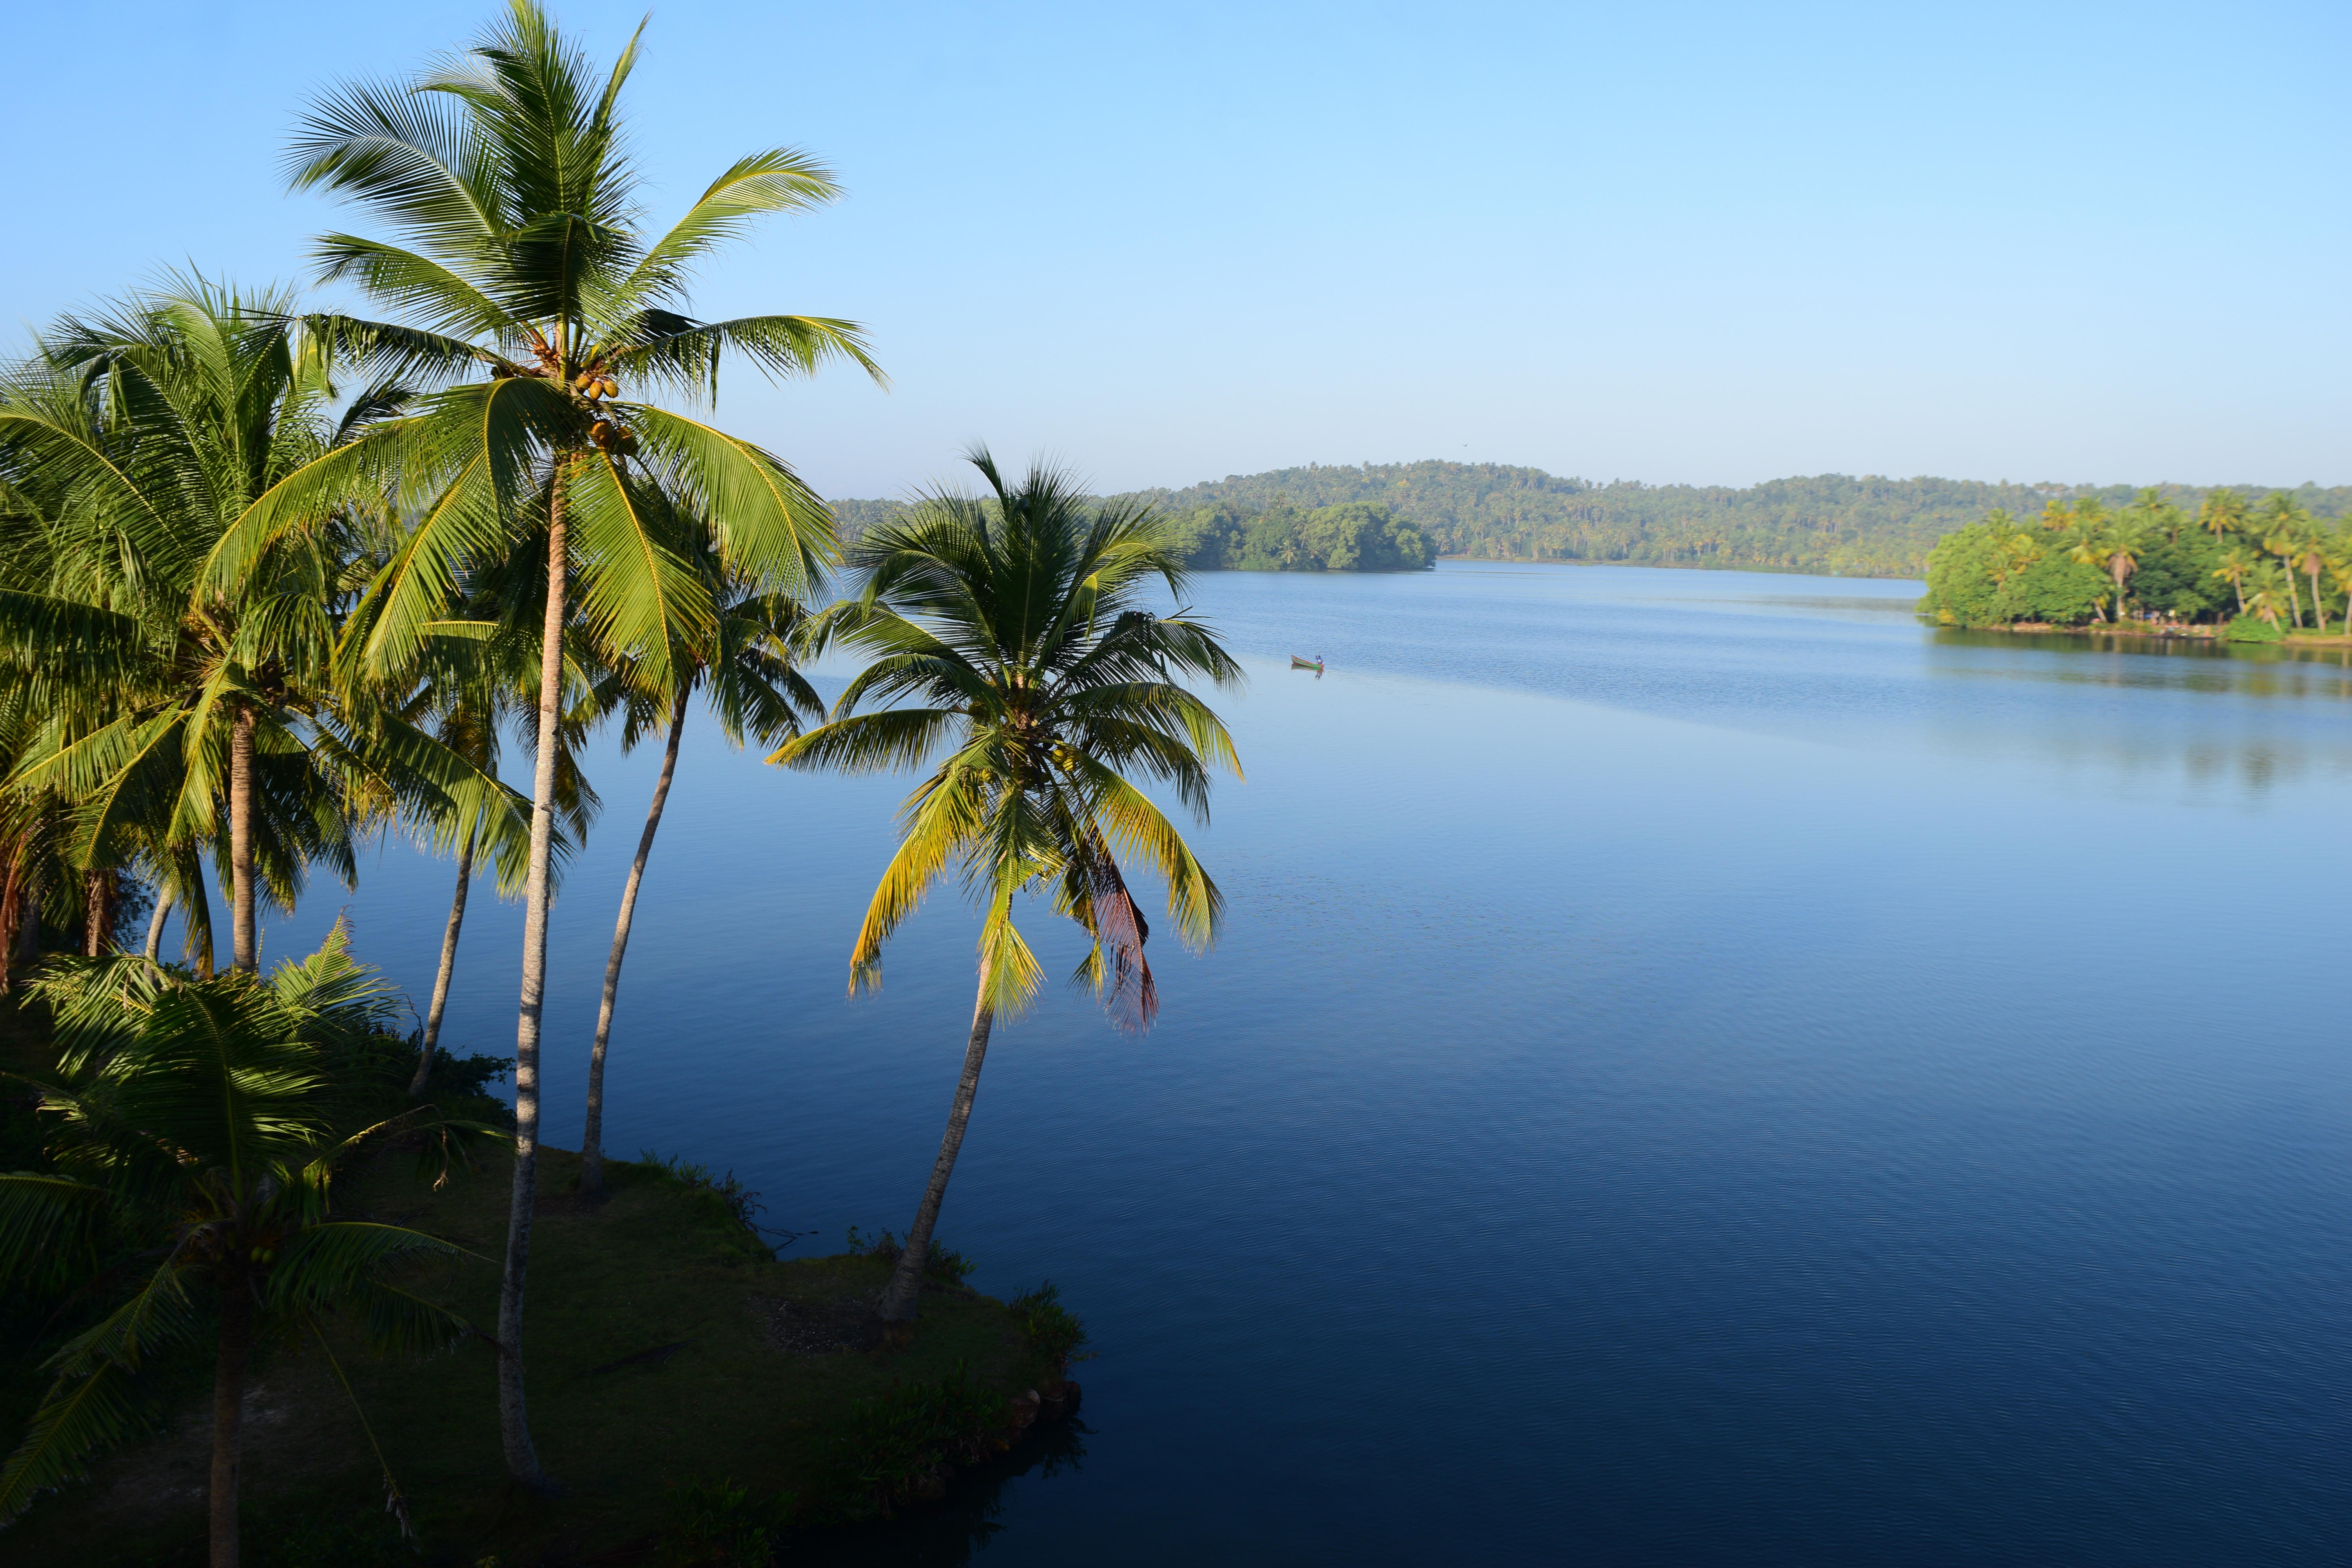 https://www.incredibleindia.org/content/dam/incredible-india-v2/images/places/varkala/varkala-ponnumthuruthu-island-ponnumthuruthu-island-varkala.jpg